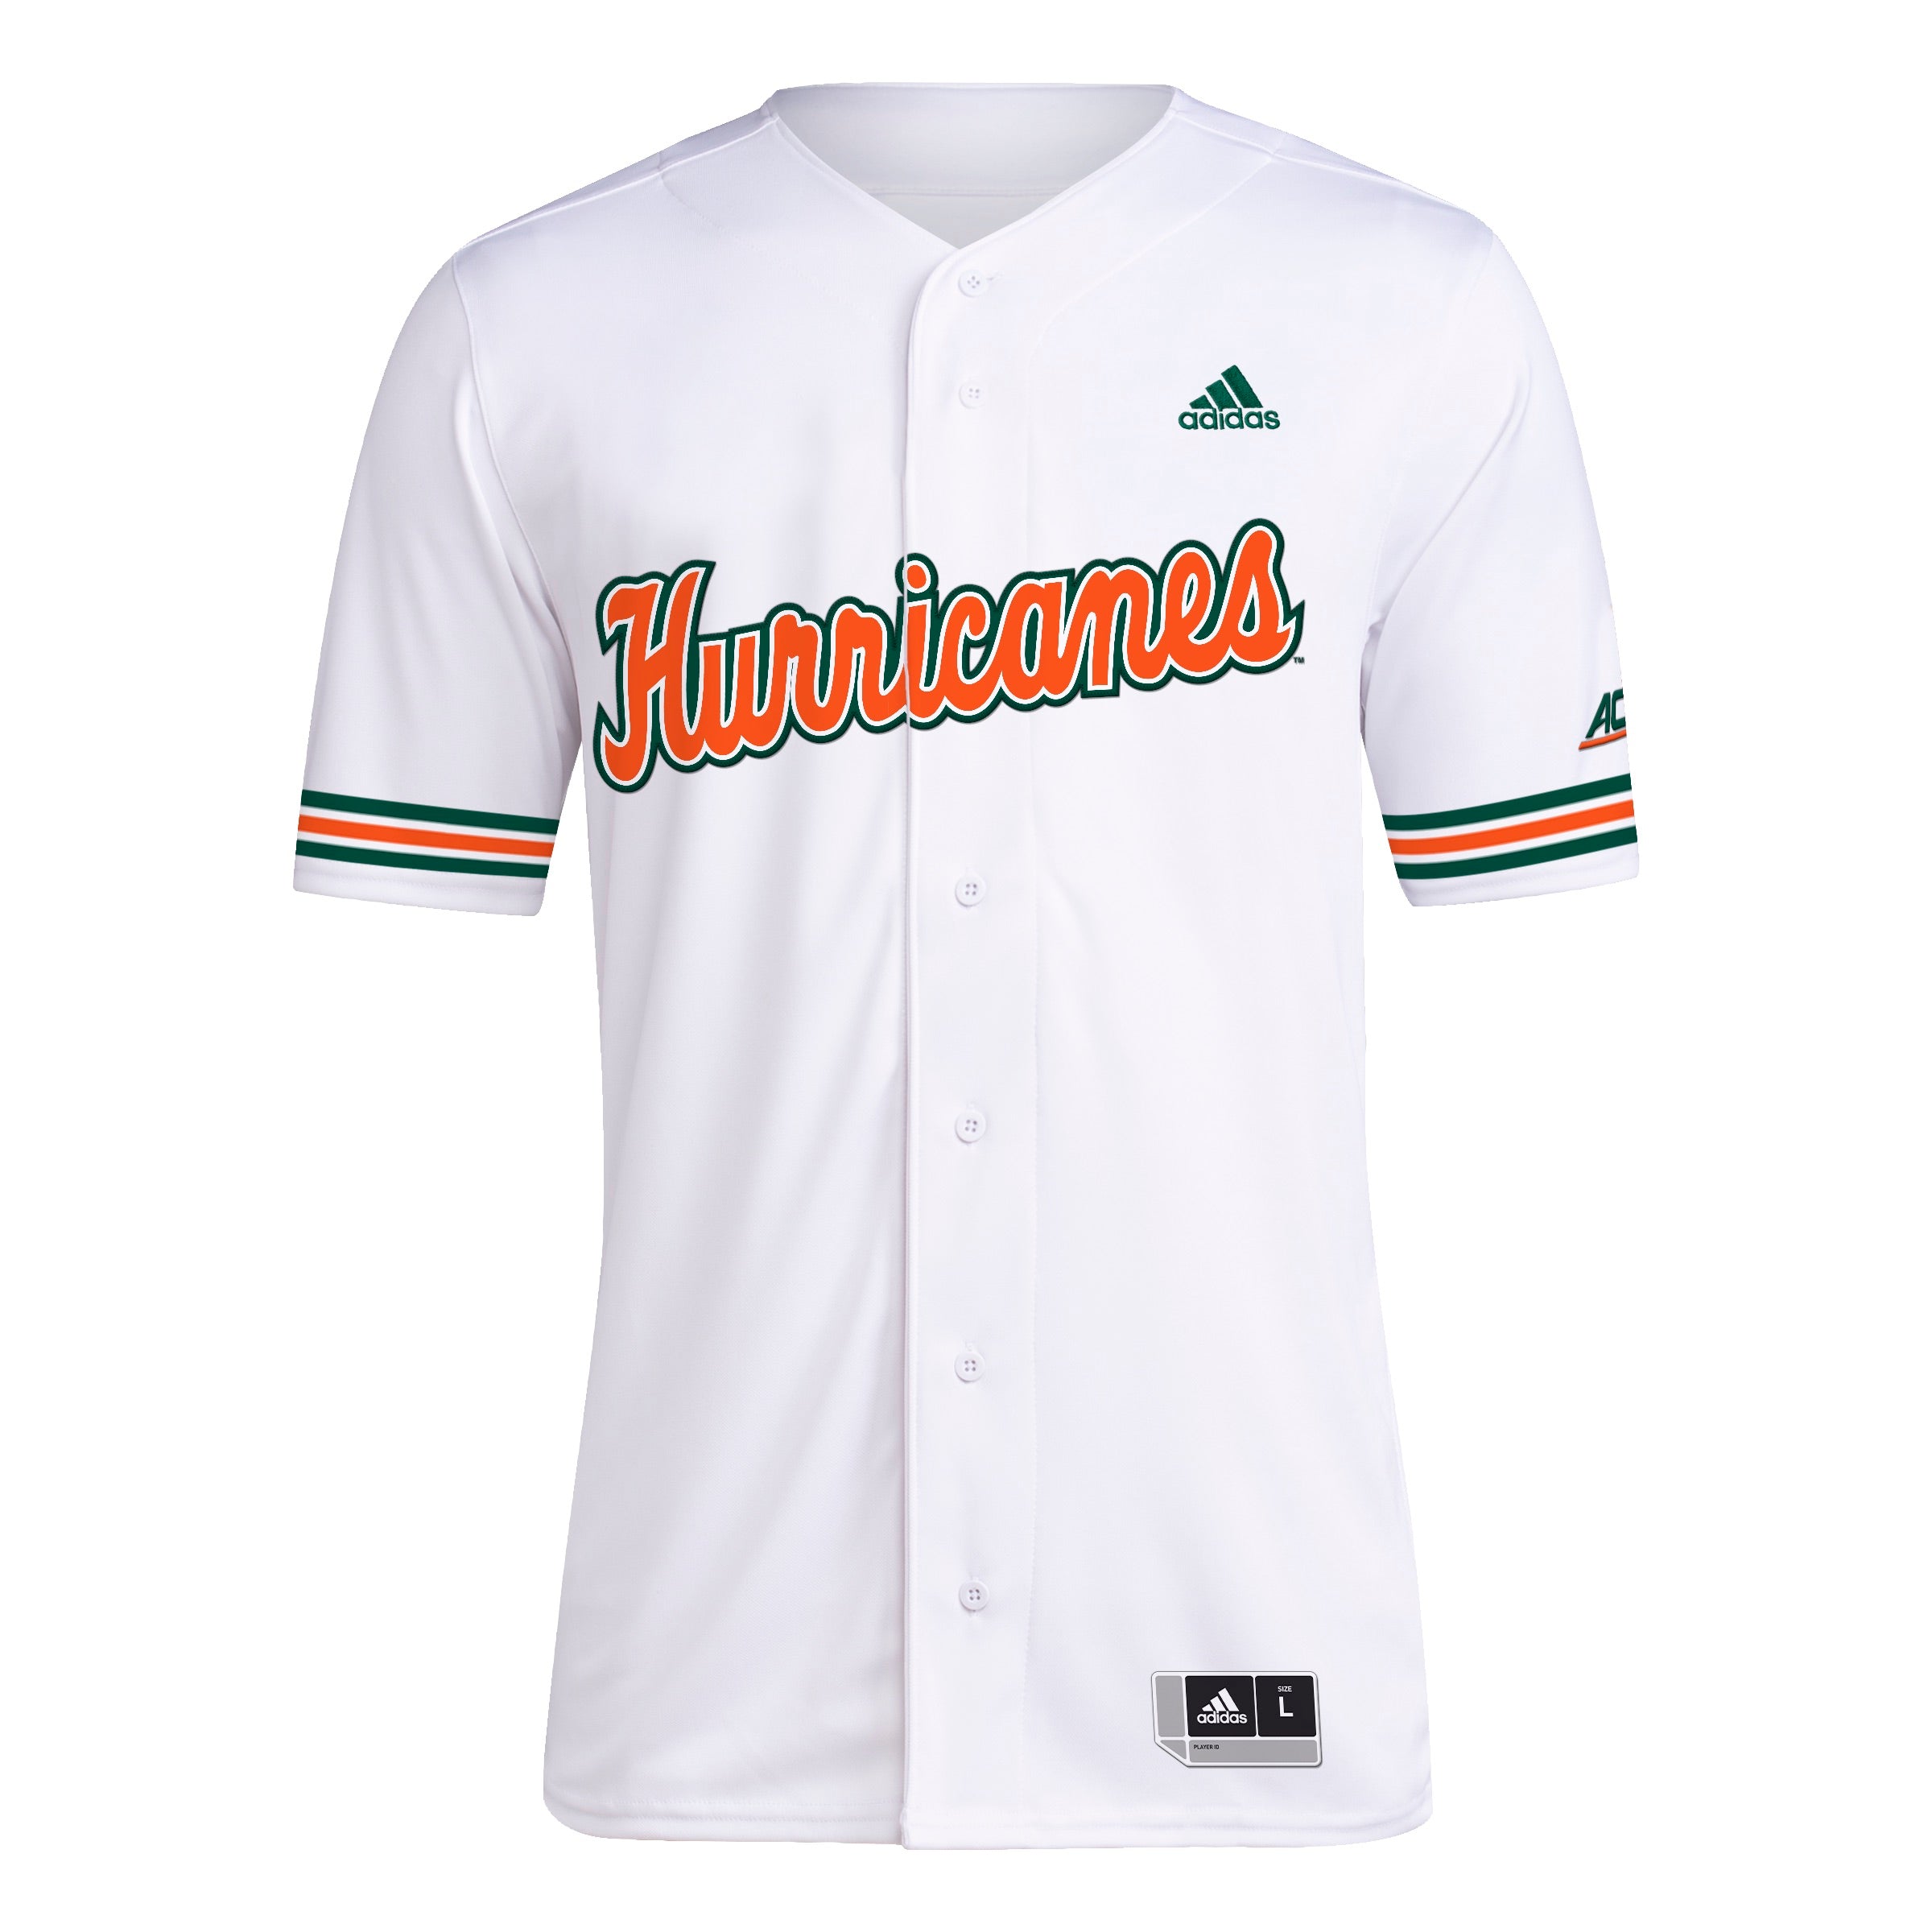 Men's Adidas White Miami Hurricanes Replica Baseball Jersey